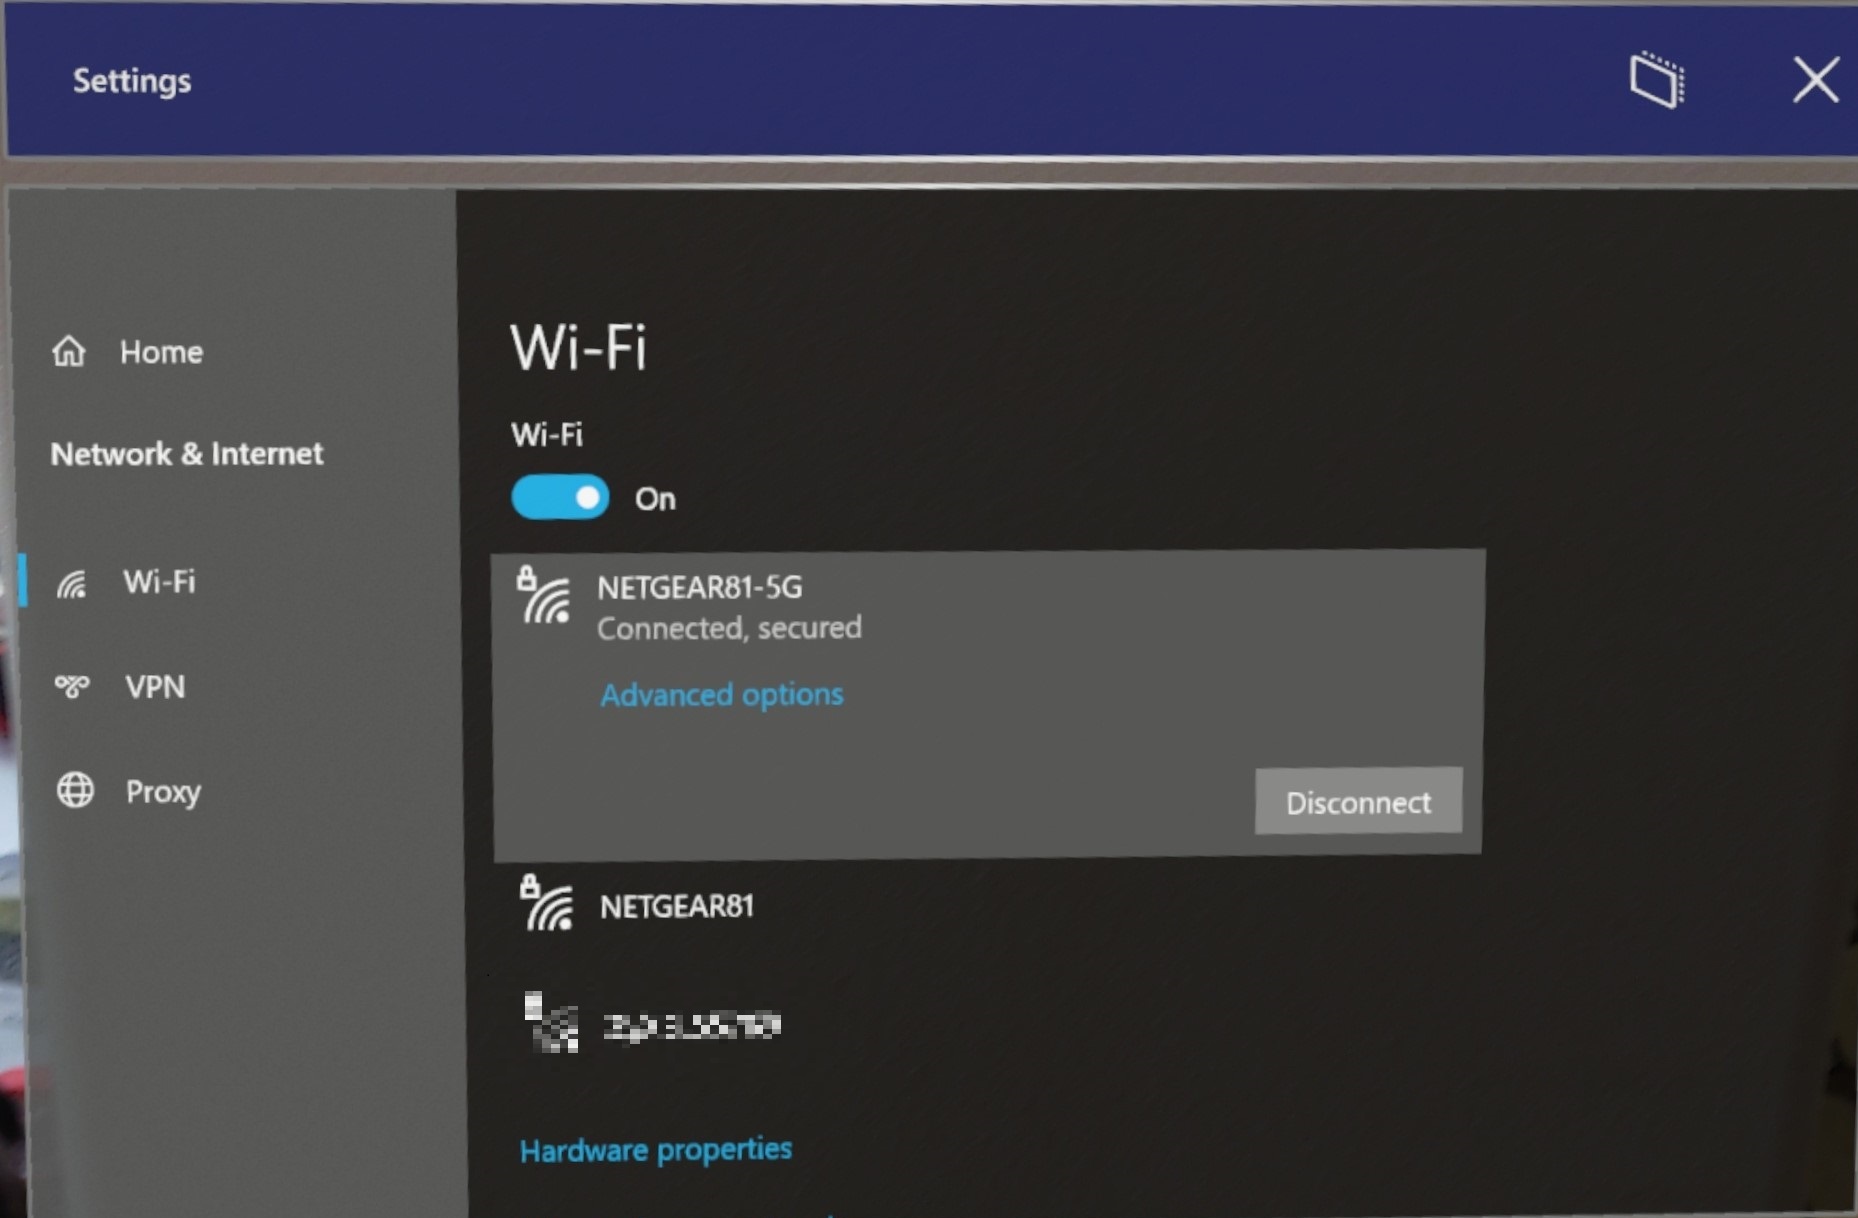 Network settings menu in Windows 10